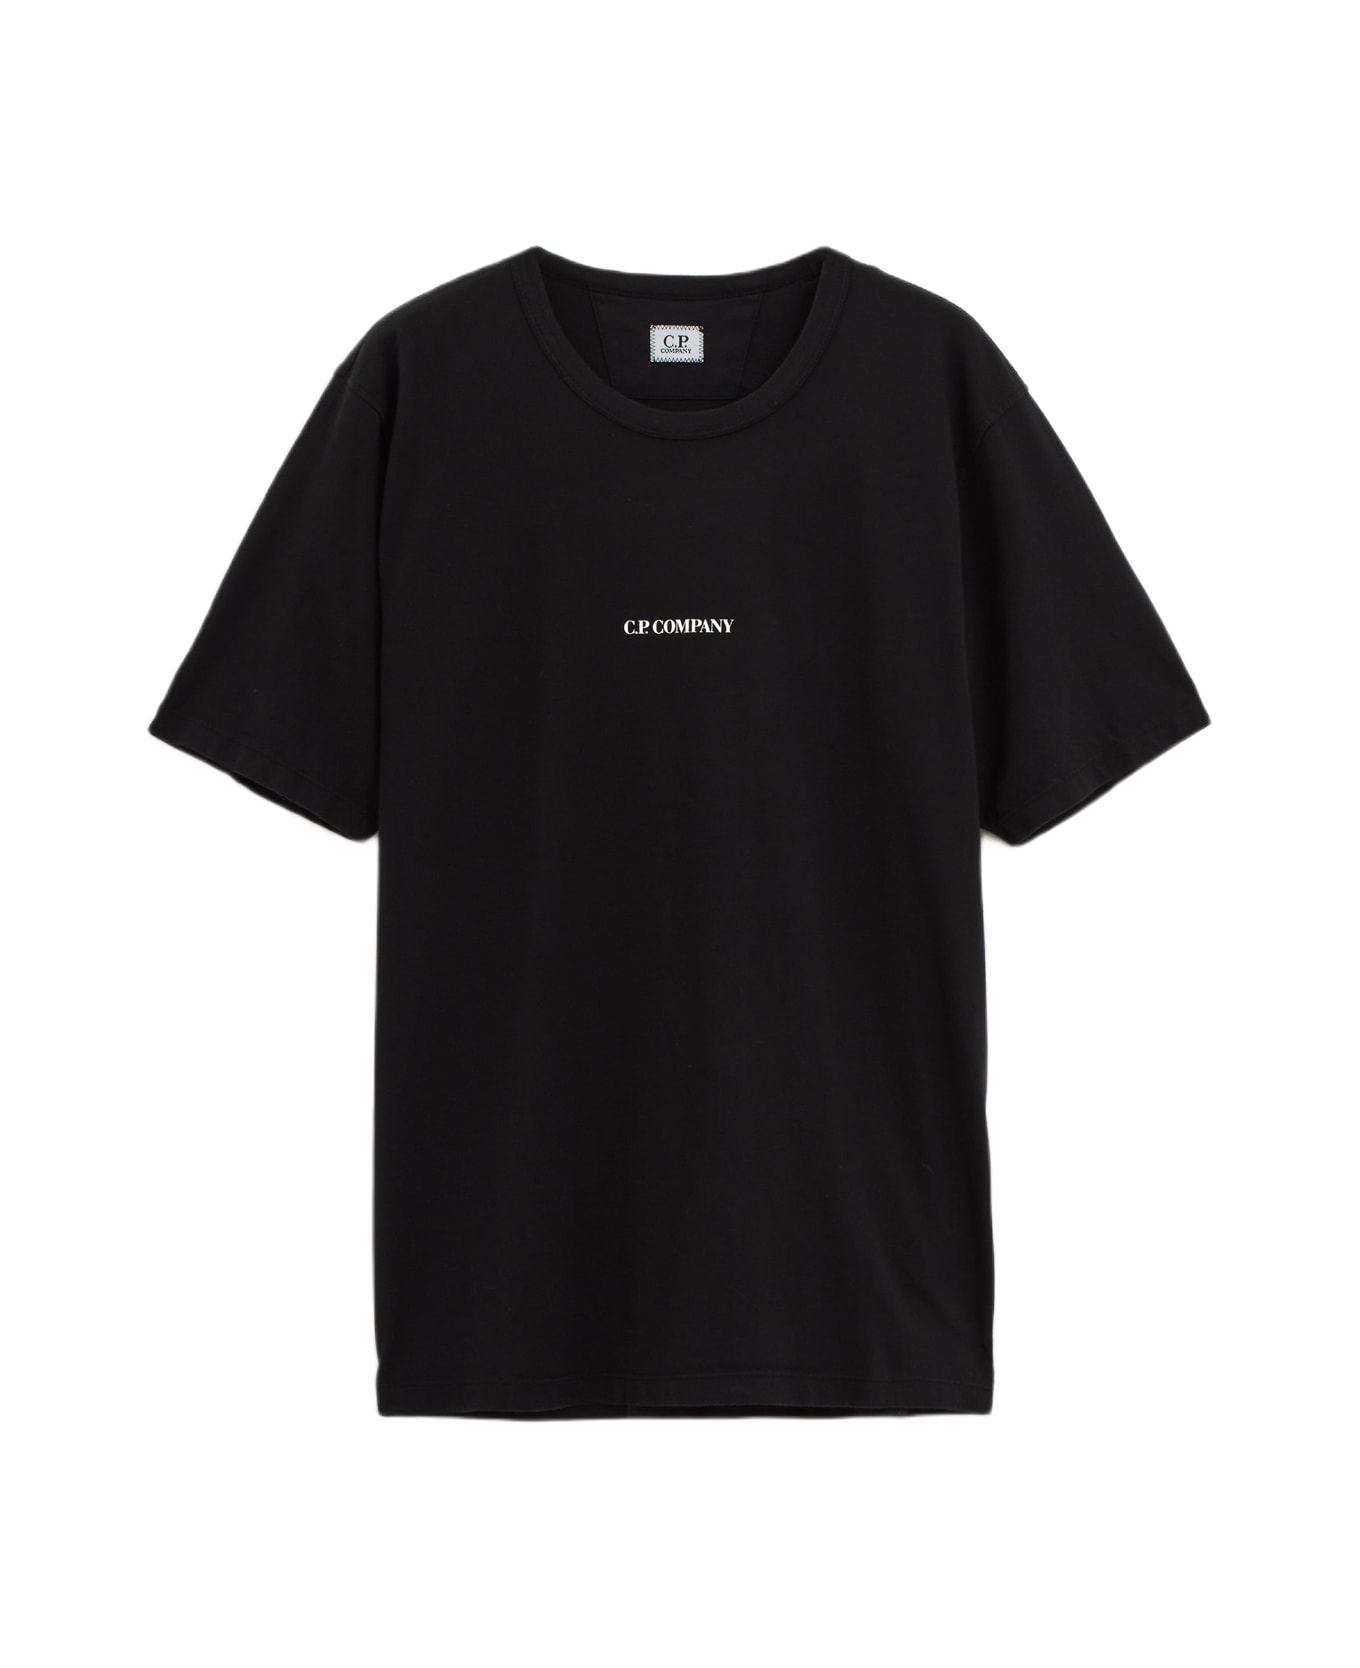 C.P. Company T-shirt - black